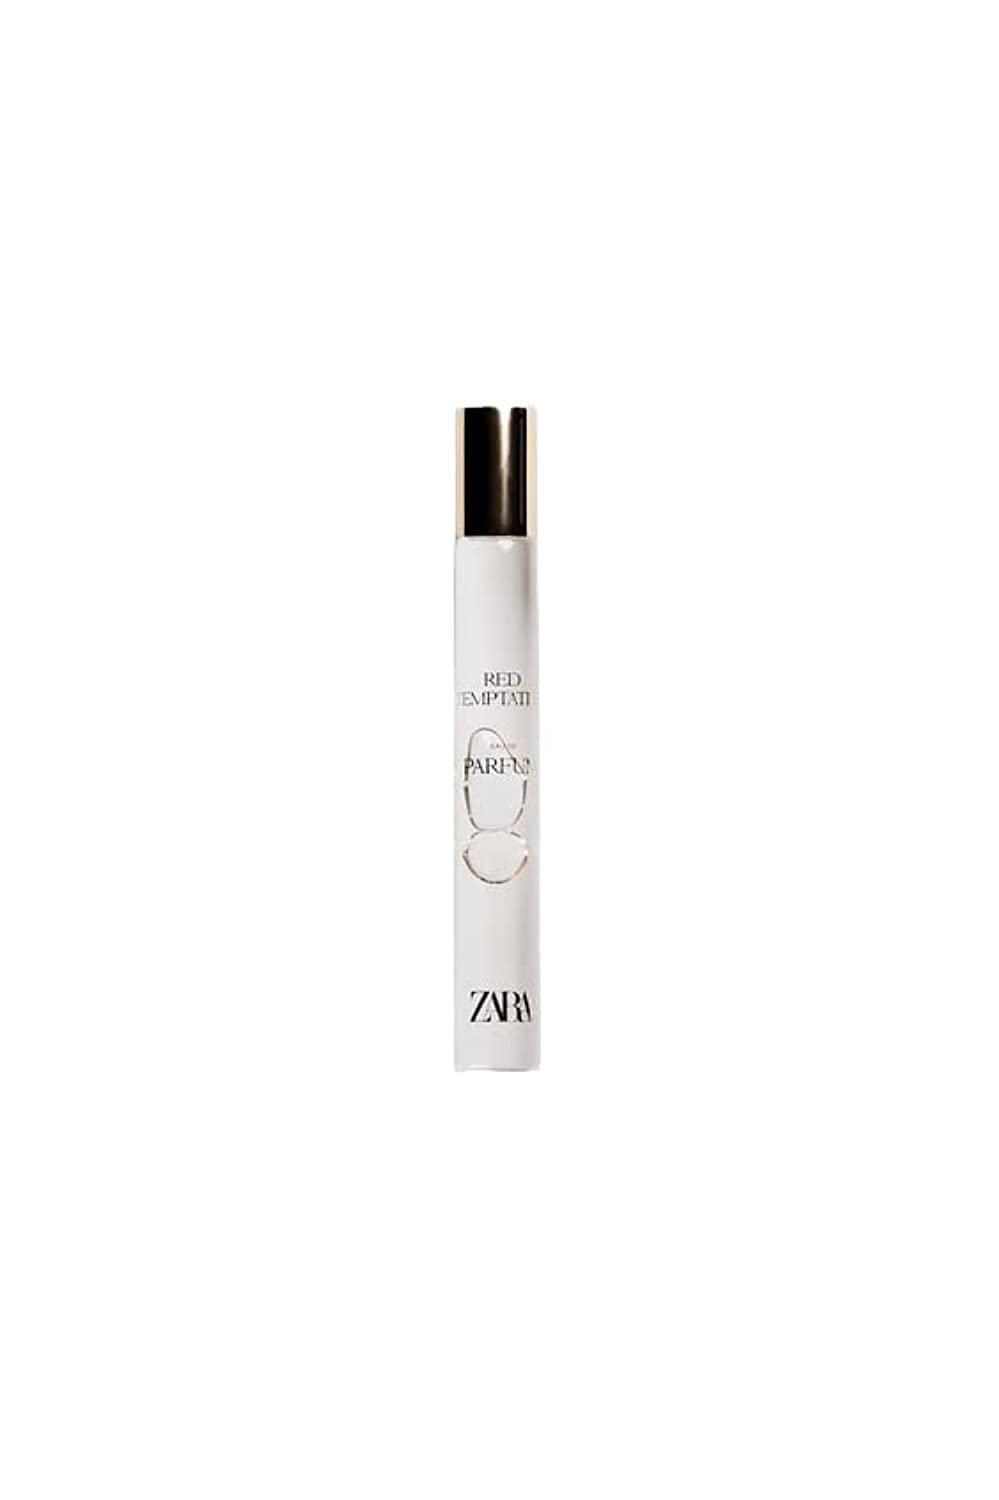 ZARA RED TEMPTATION EDP 10 ML (0.34 FL. OZ). An elegant, intense and long-lasting fragrance.